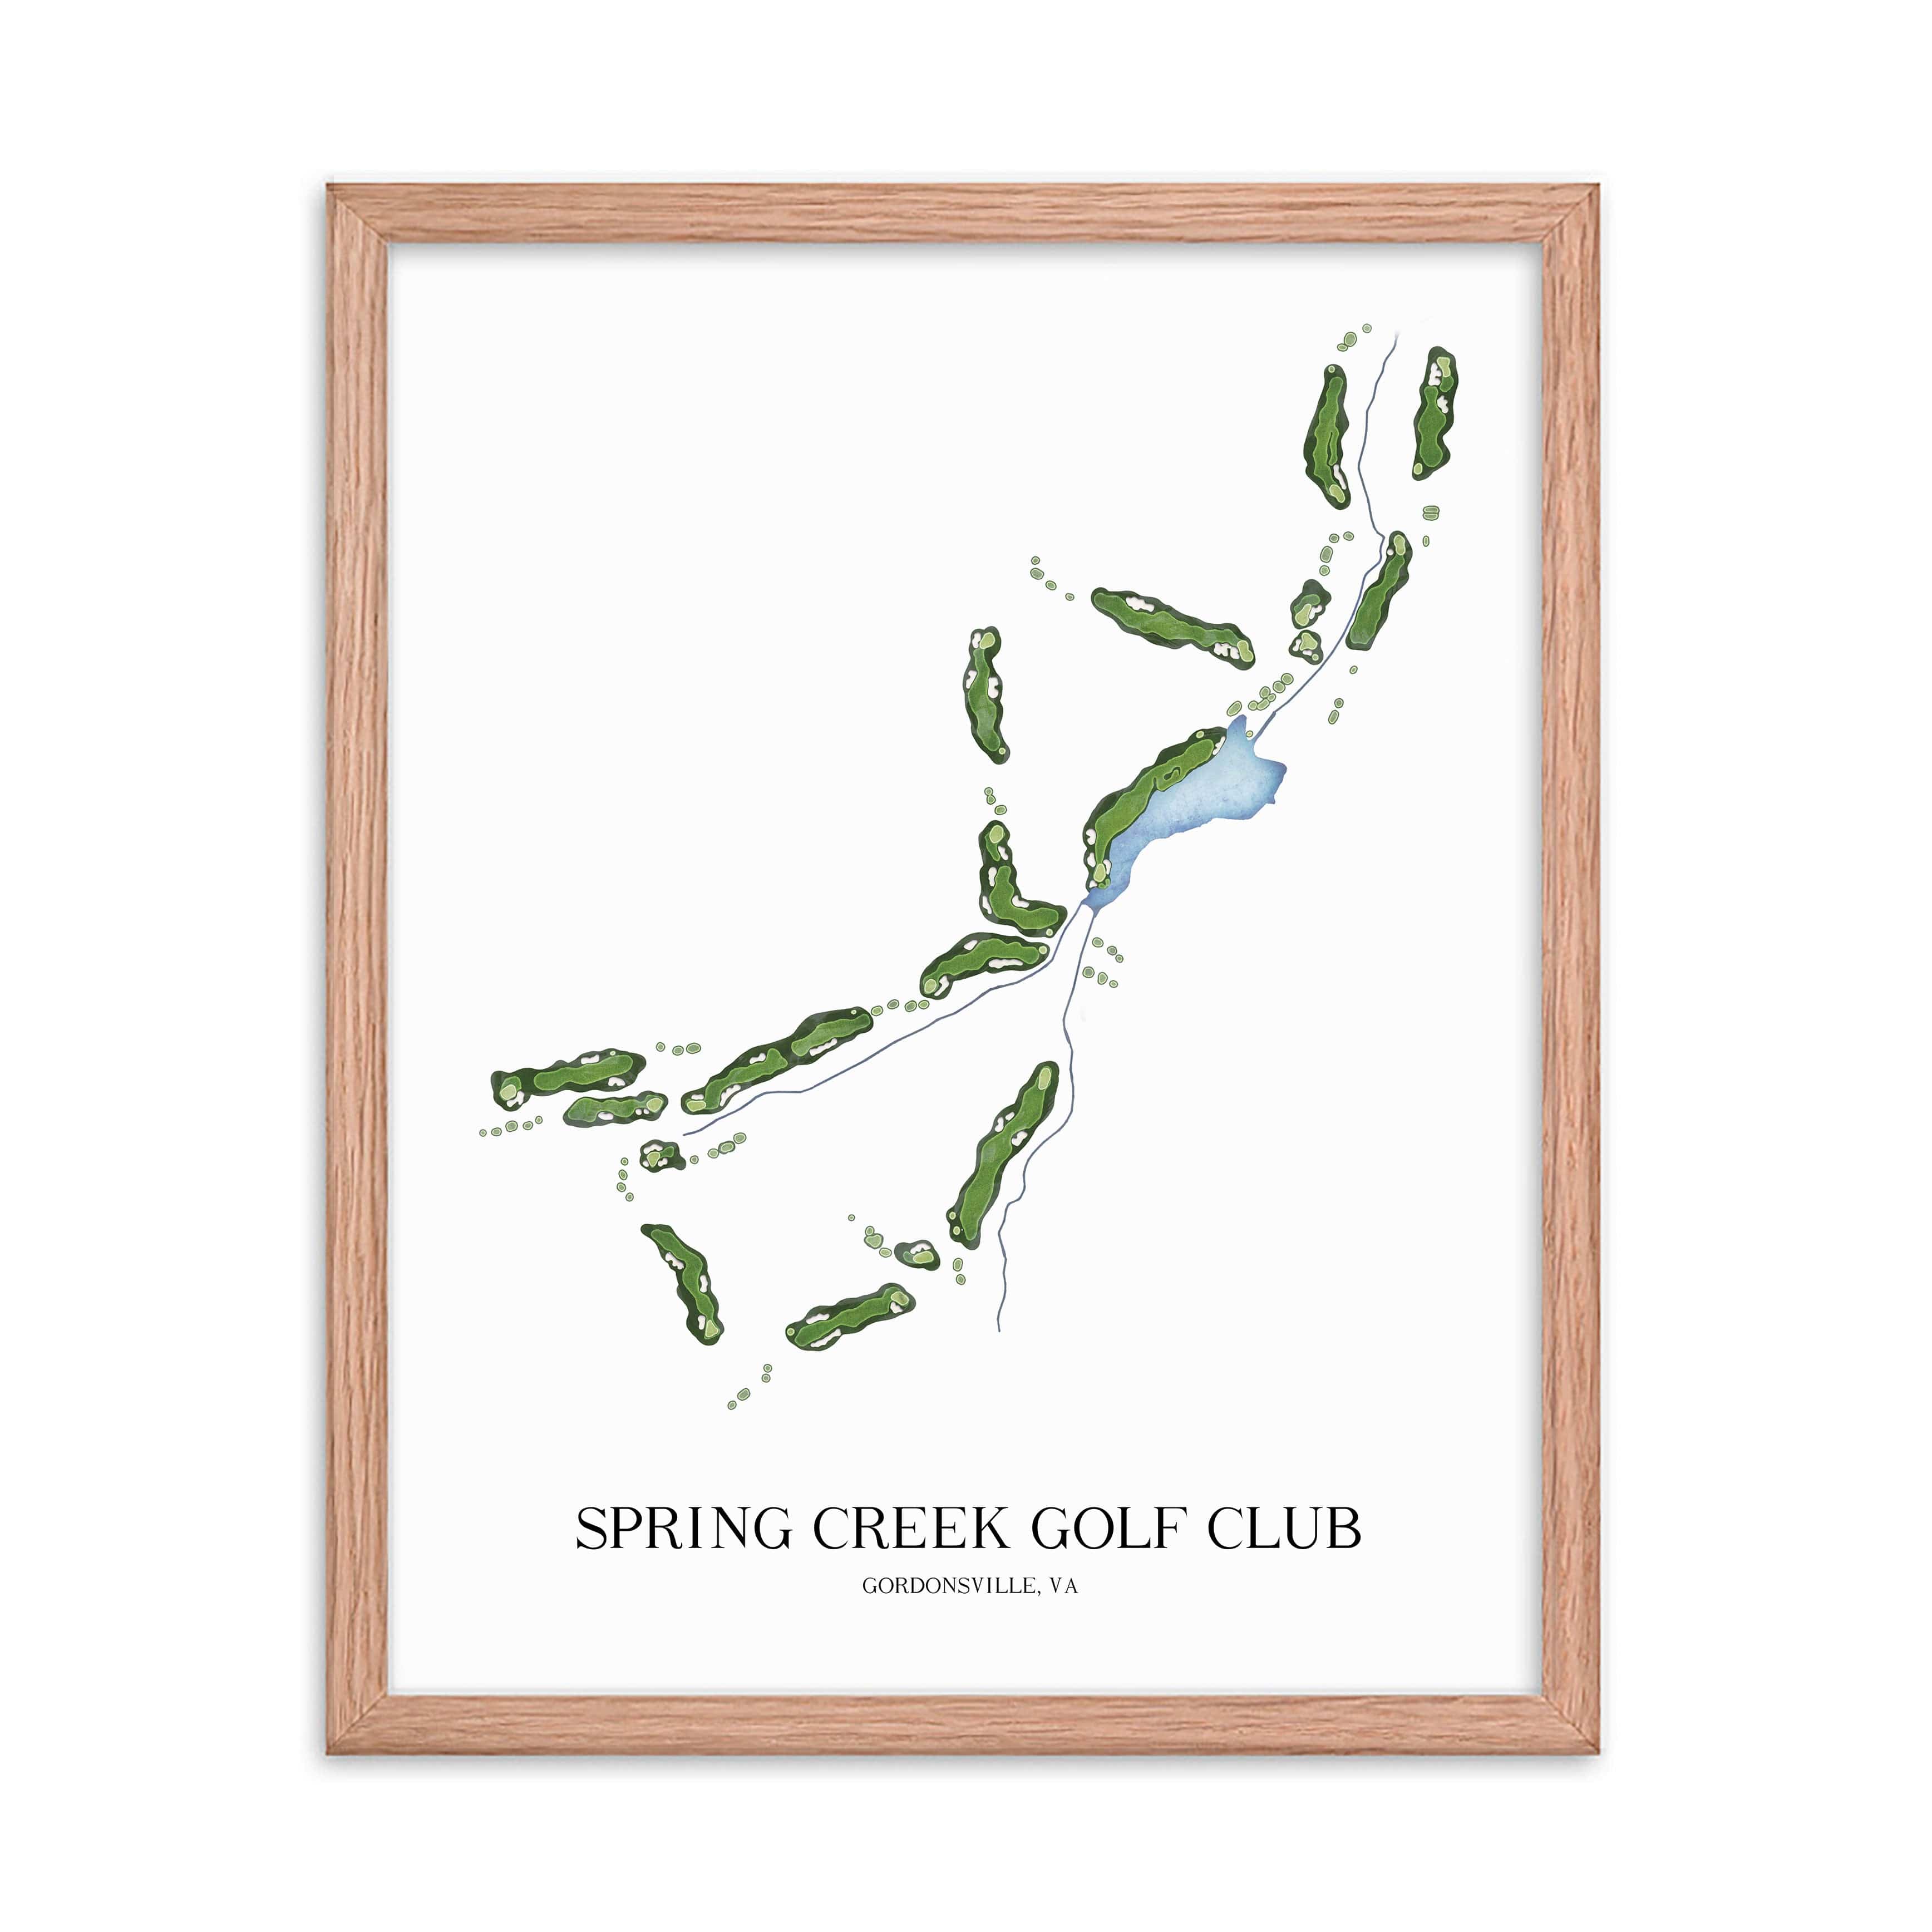 The 19th Hole Golf Shop - Golf Course Prints -  Spring Creek Golf Club Golf Course Map